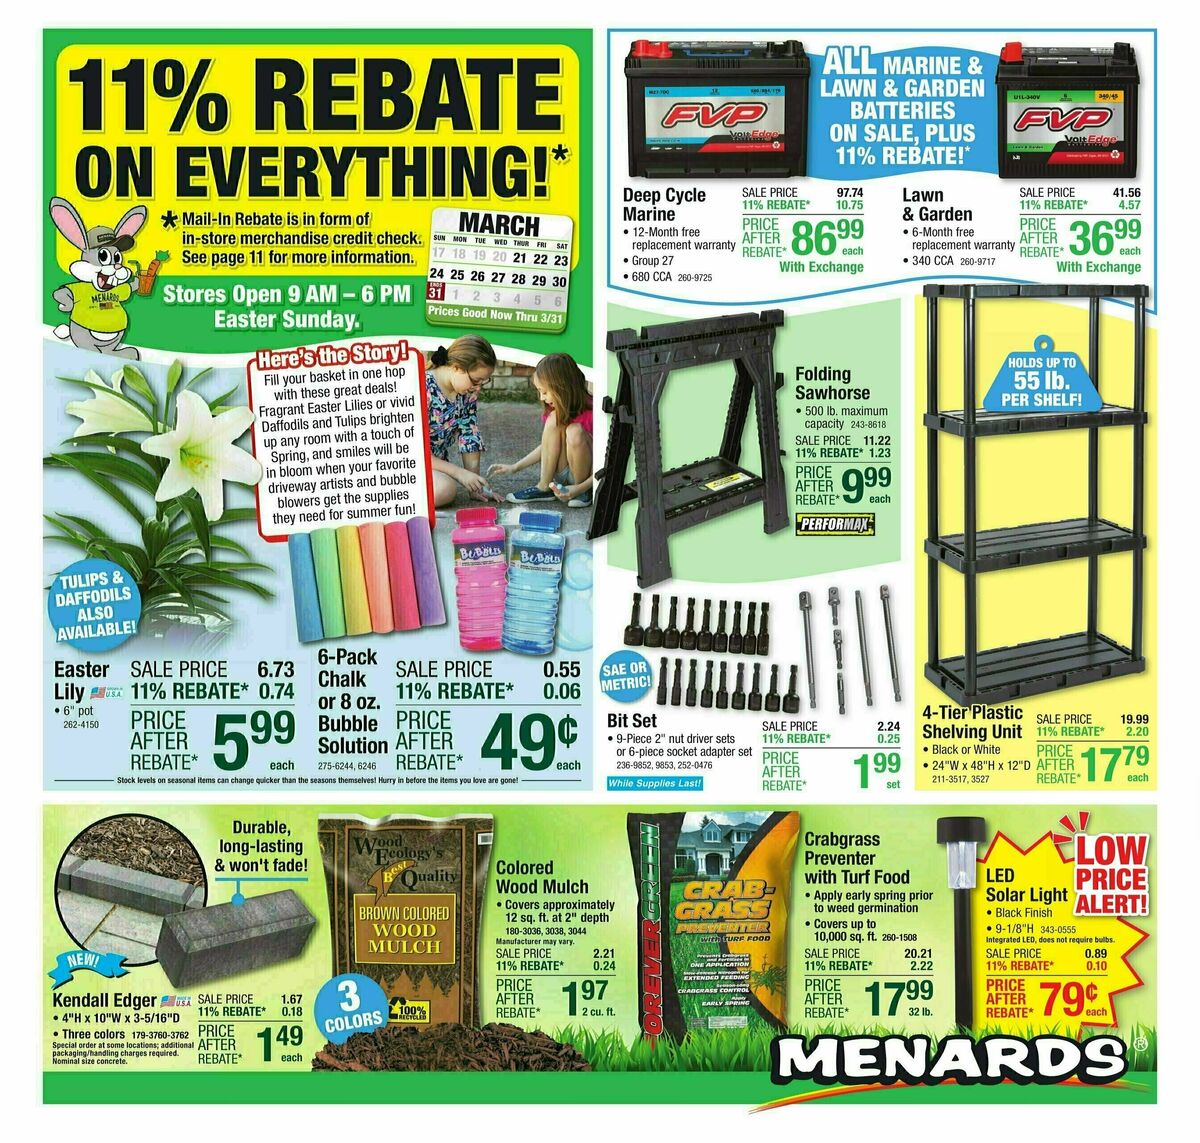 Menards 11% Rebate Sale Weekly Ad from March 20